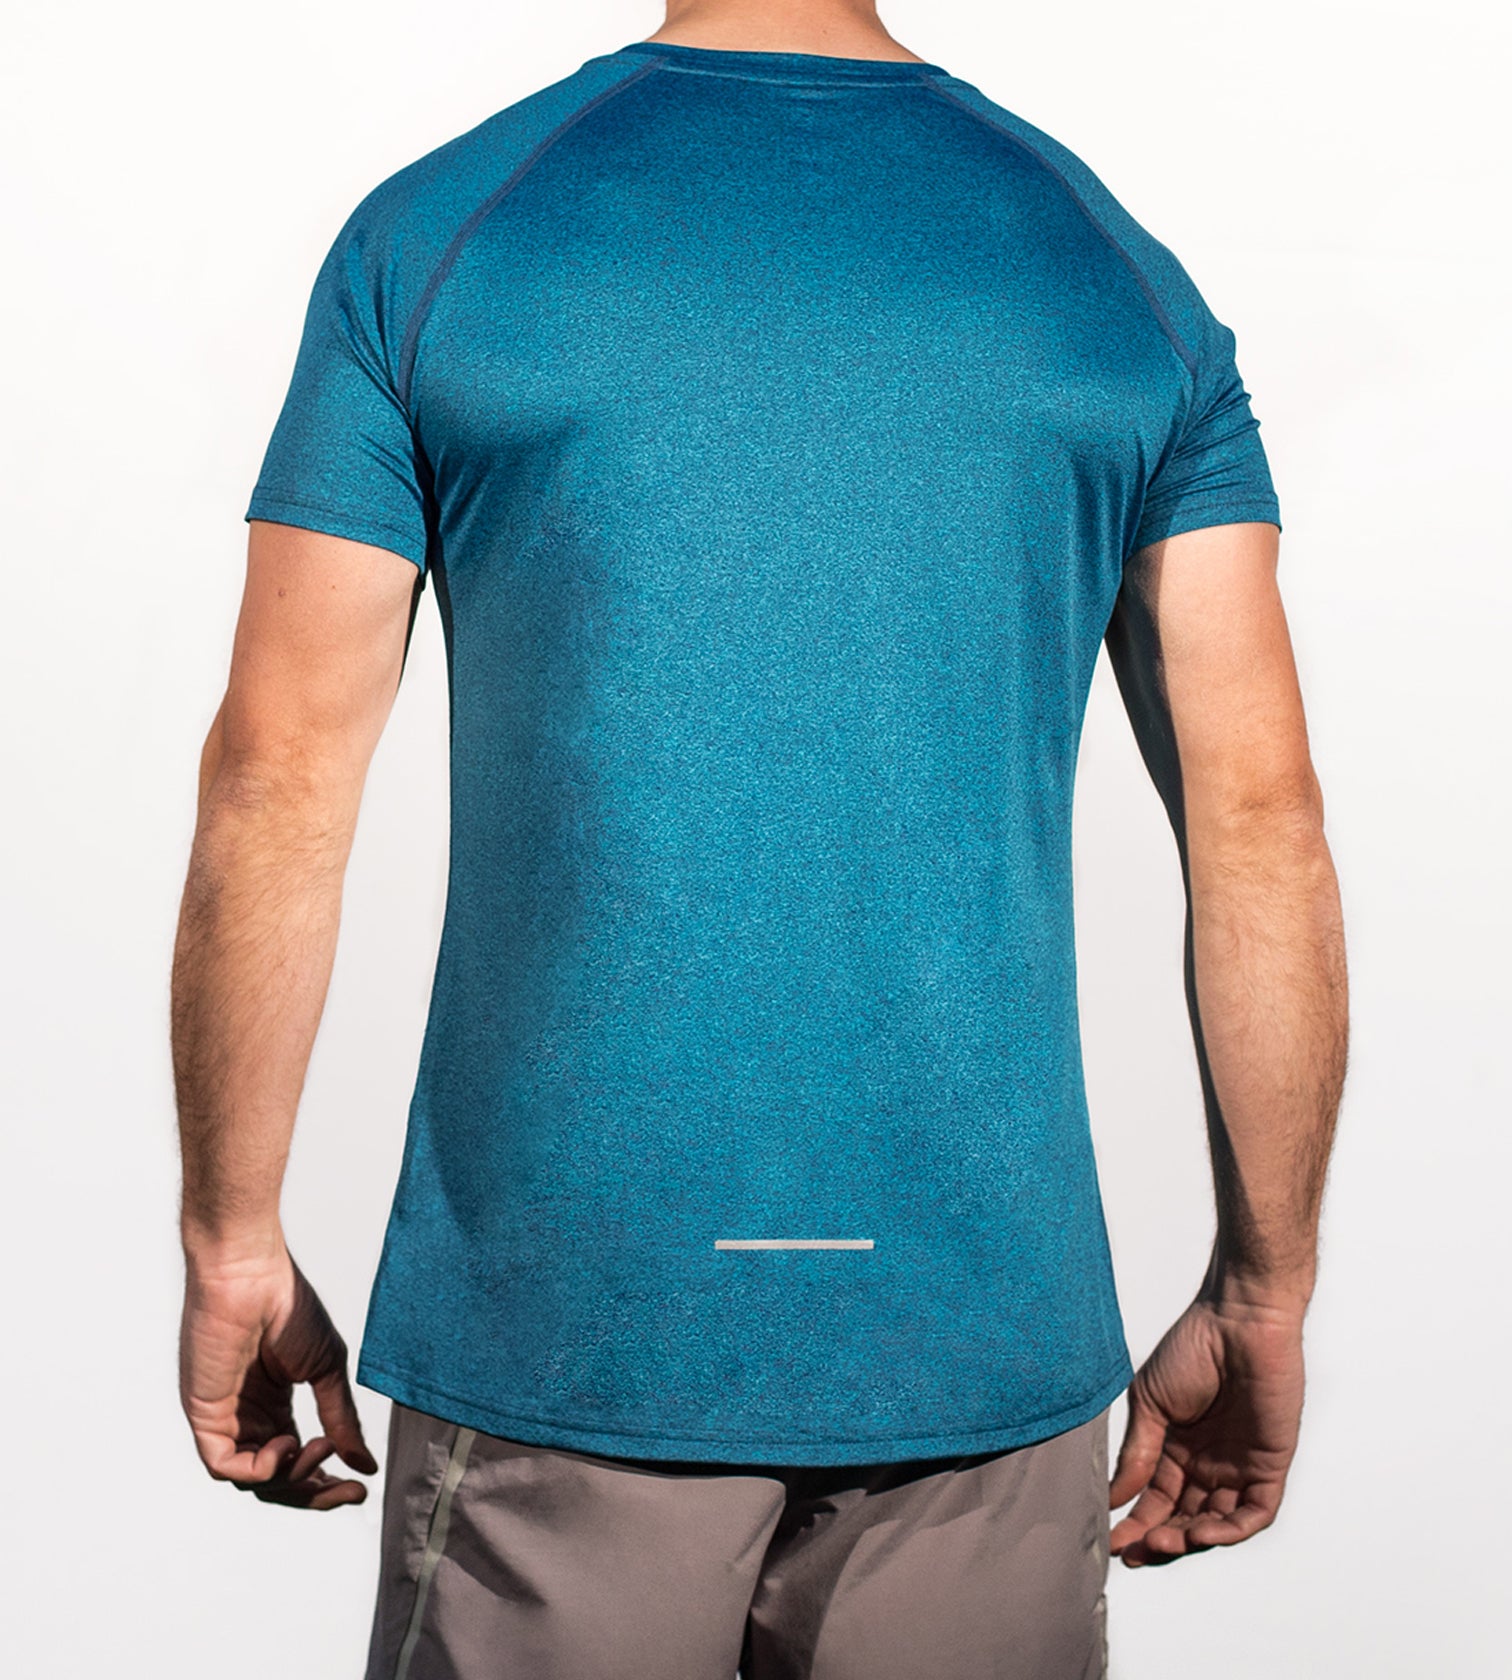 CamisetaCamisetas tecnicas para running, trail running, crossfit, gym, trekking, de hombre - Upgrade Wear